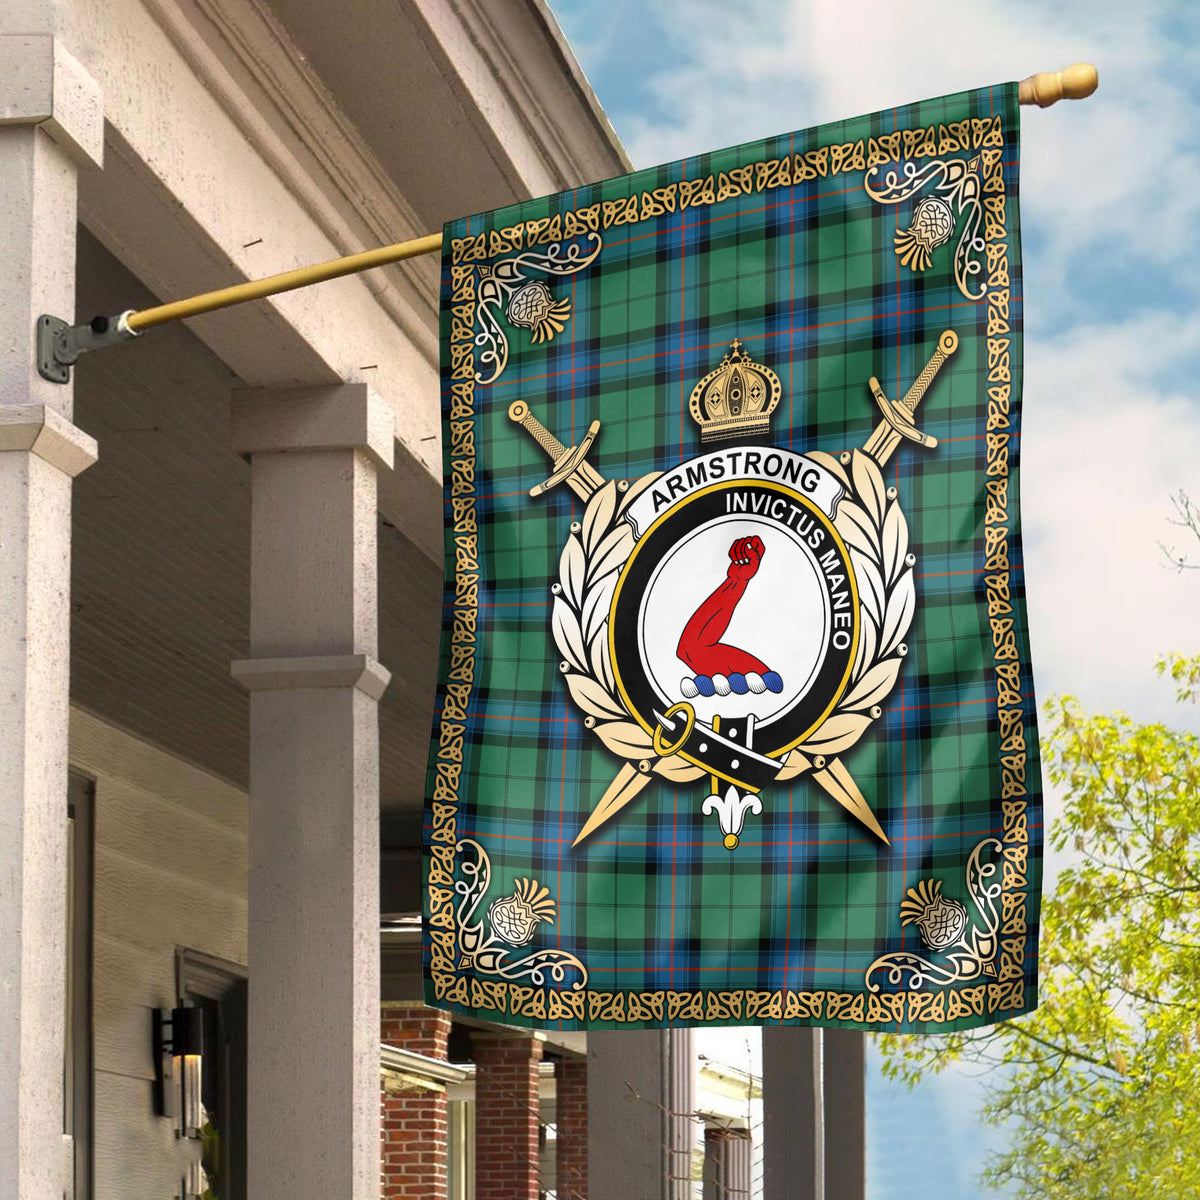 Armstrong Ancient Tartan Crest Garden Flag - Celtic Thistle Style